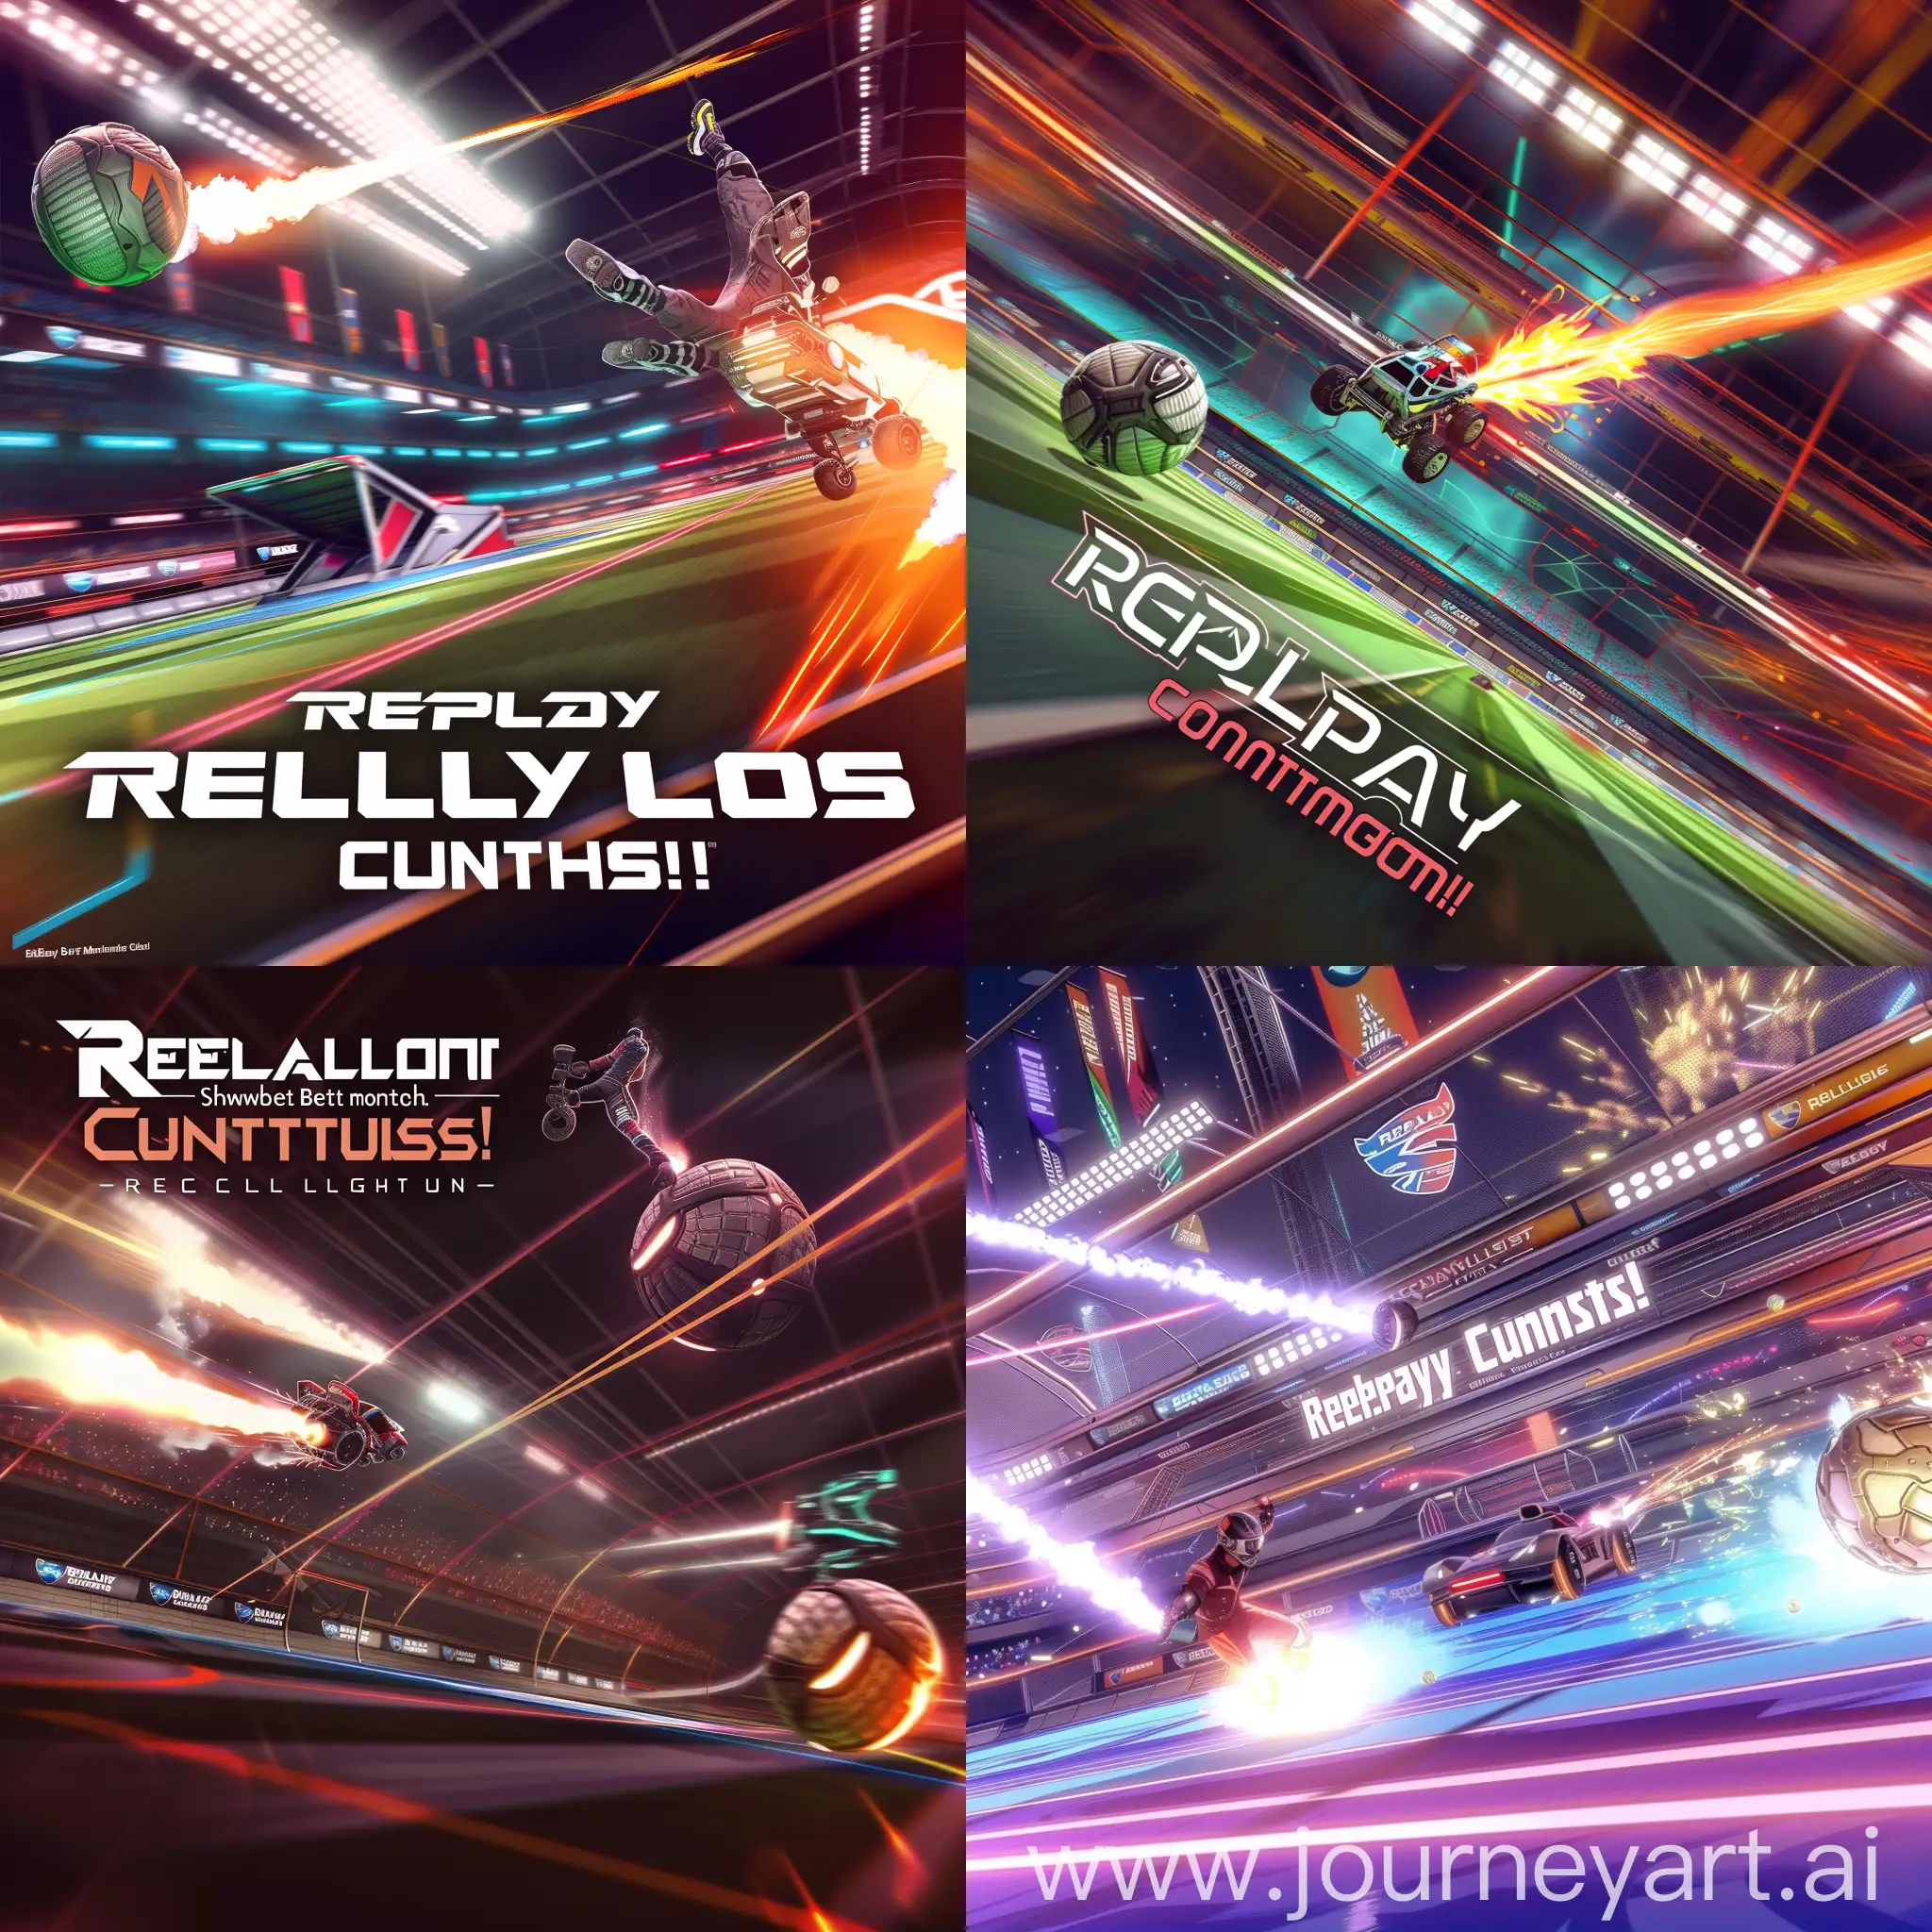 Rocket-League-Replay-Contest-HighOctane-Aerial-Maneuvers